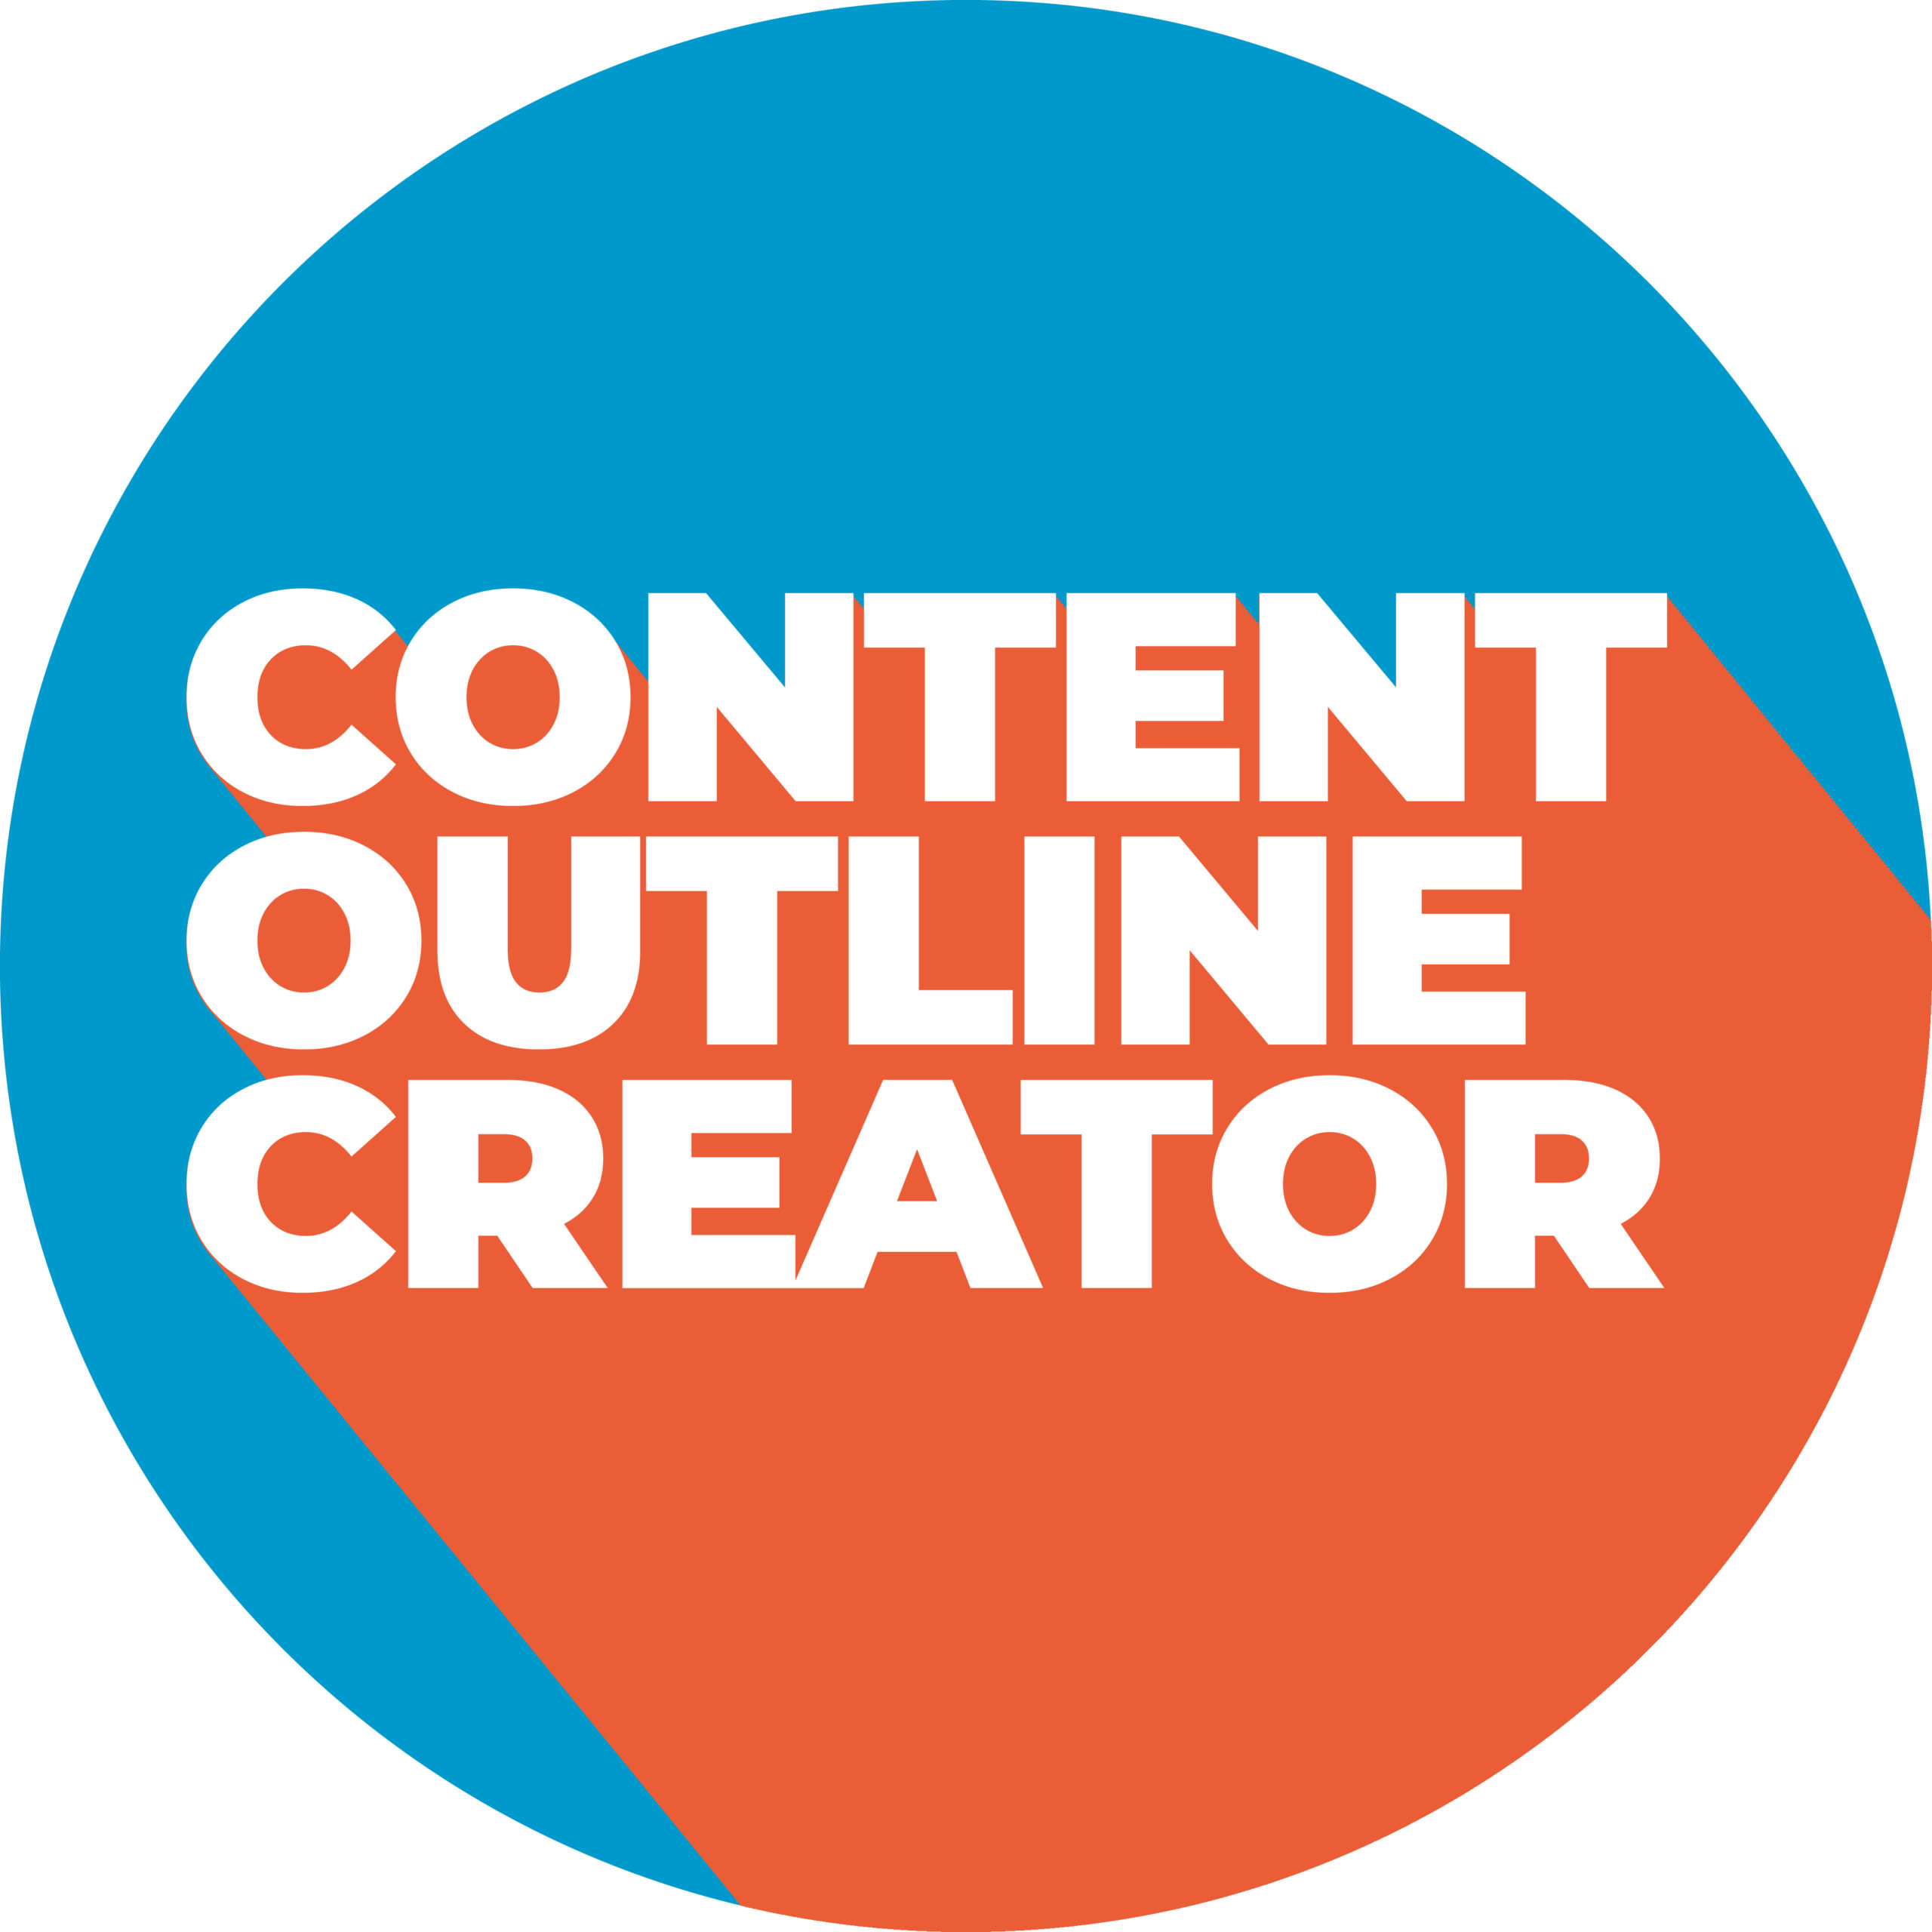 Content Outline Creator